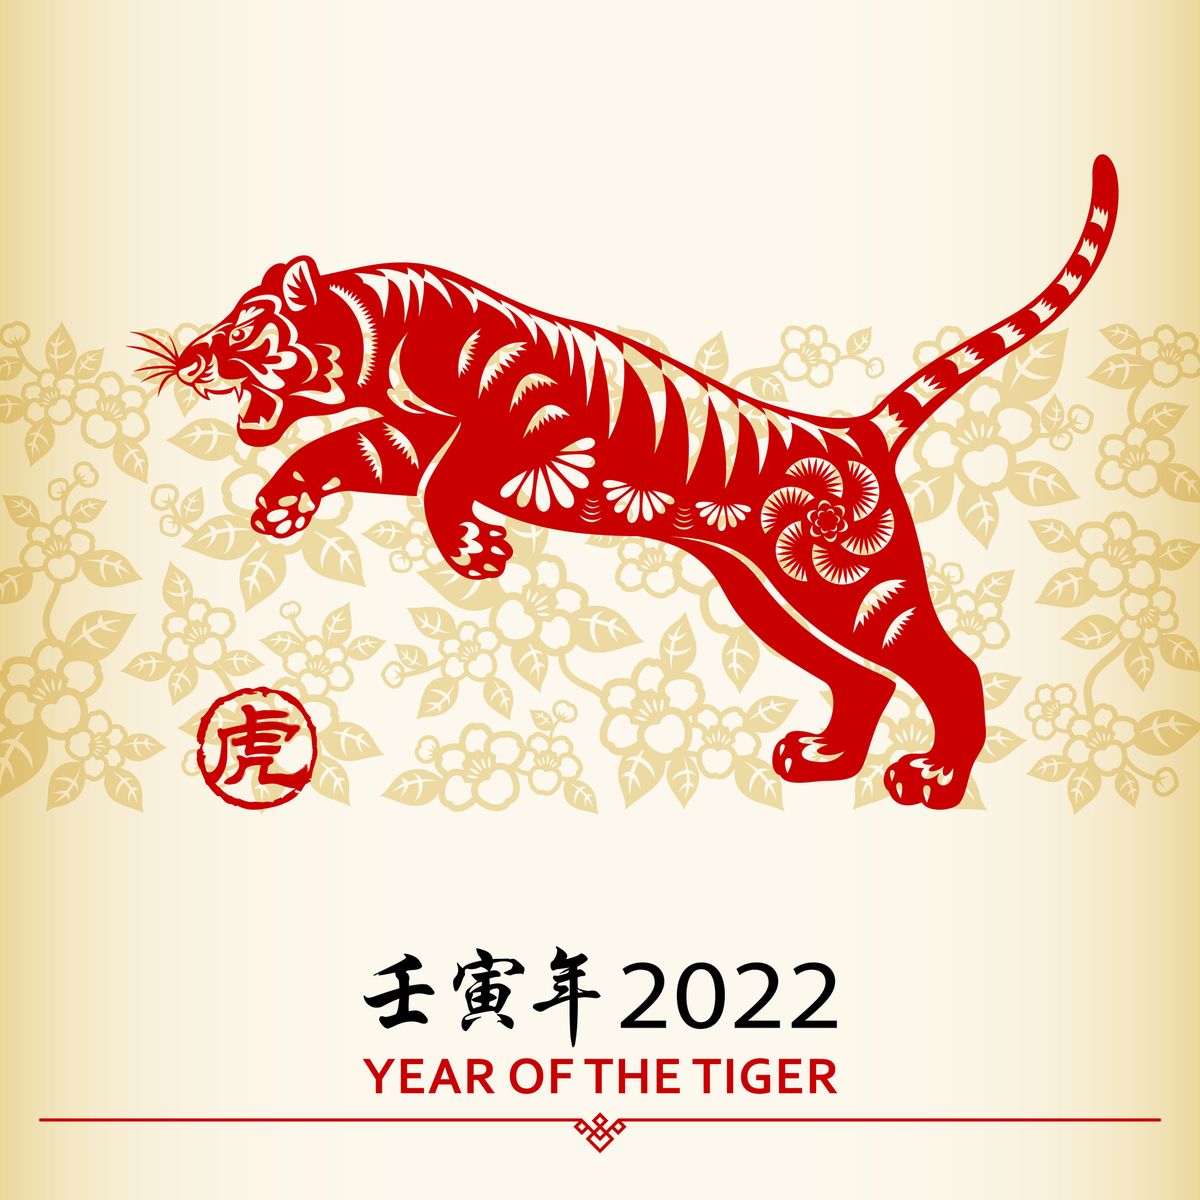 Ramalan shio macan tahun 2022